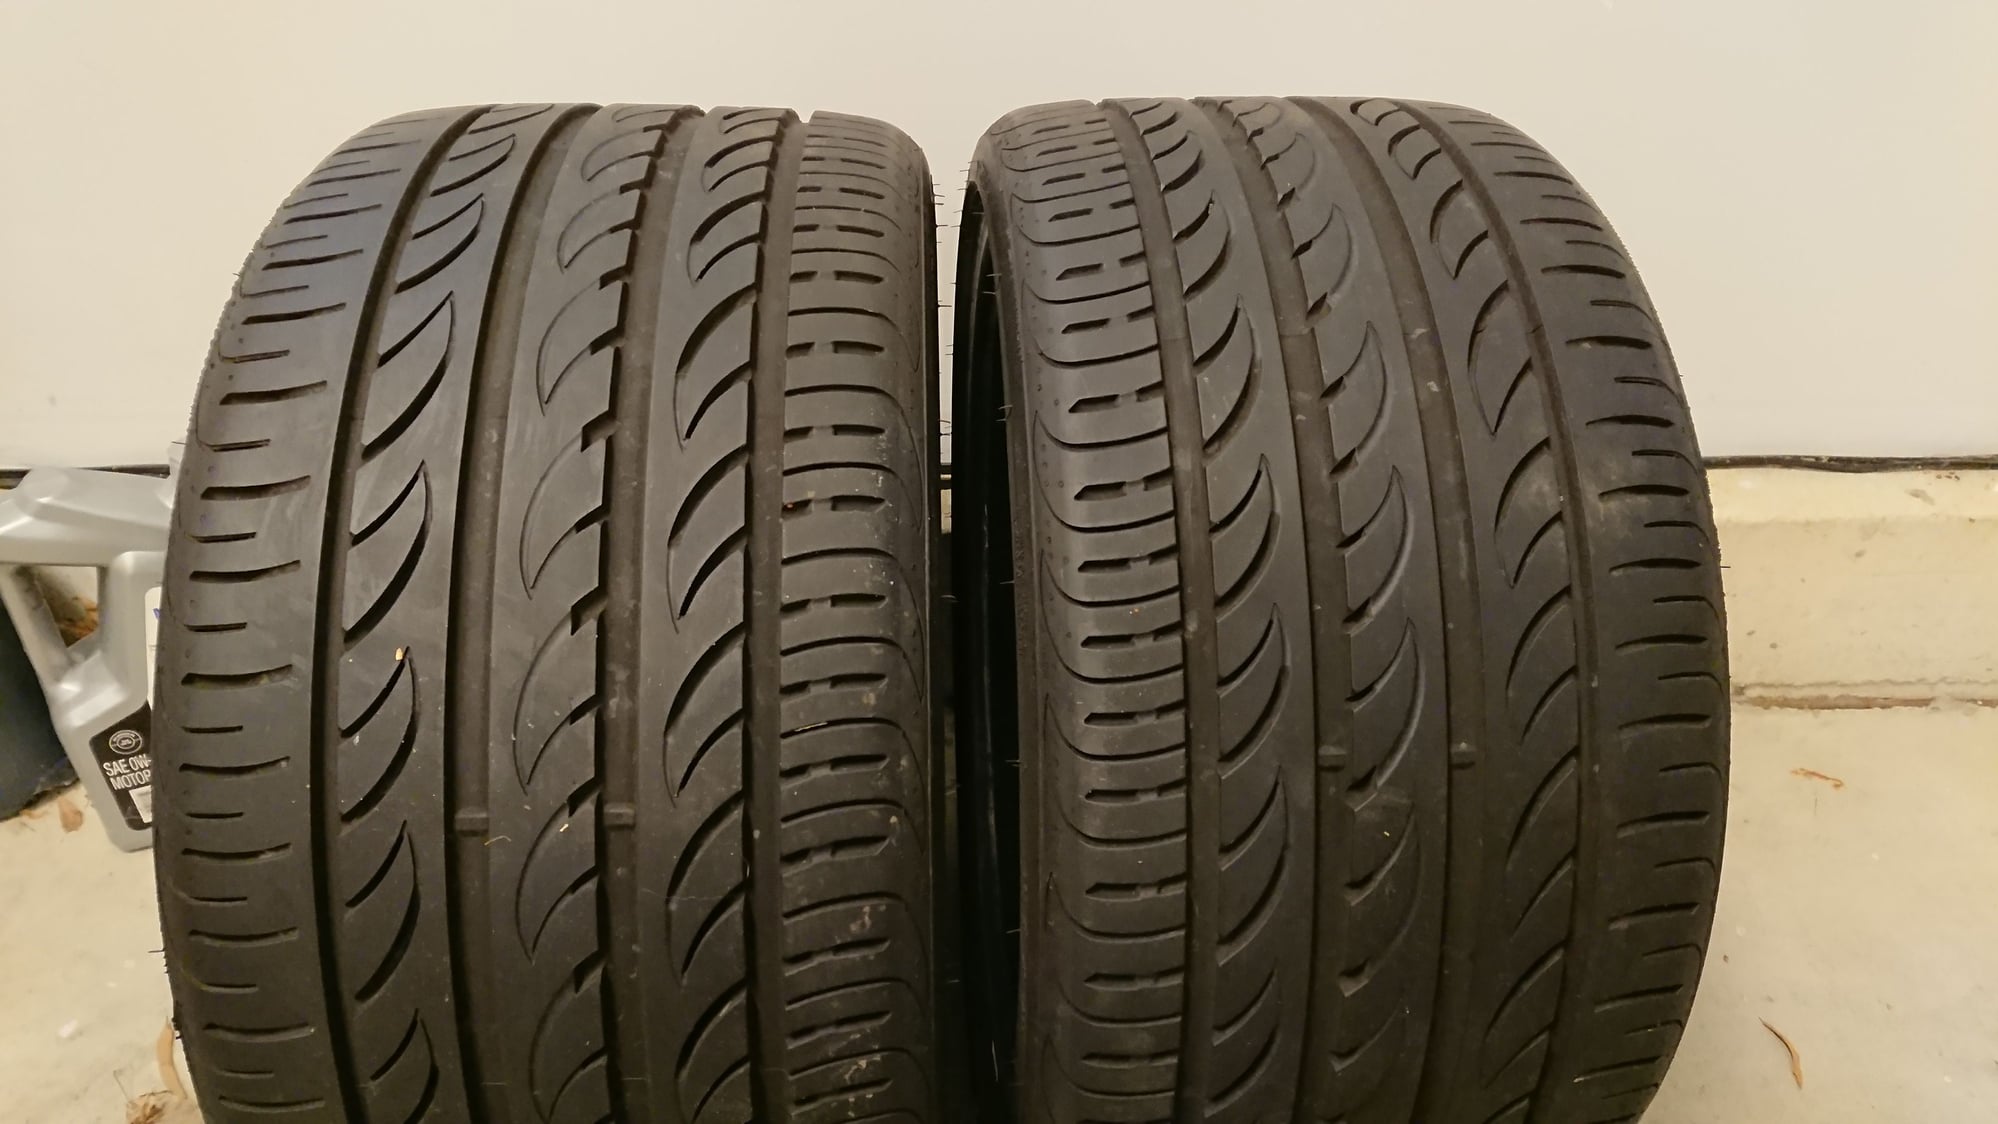 Wheels and Tires/Axles - Pirelli P Zero Nero GT Tires - Excellent Condition - Used - Lumberton, NJ 08048, United States